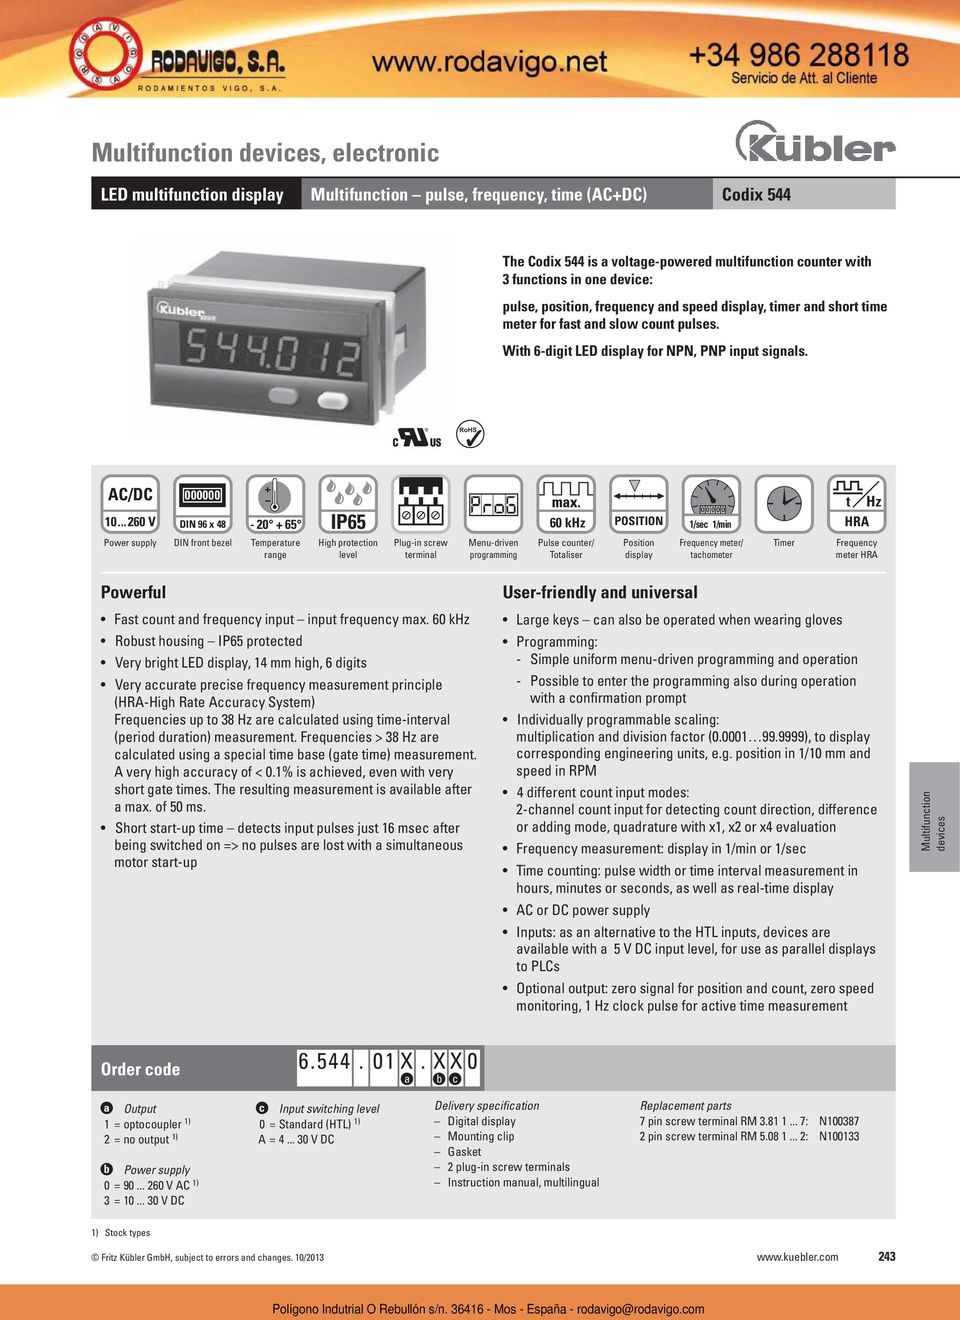 ..260 V DIN 96 x 48 Power supply DIN front bezel IP65-20 + 65 60 khz Temperature range High protection level terminal programming Pulse counter/ Totaliser POSITION Position display 0 0 0 0 0 1/sec